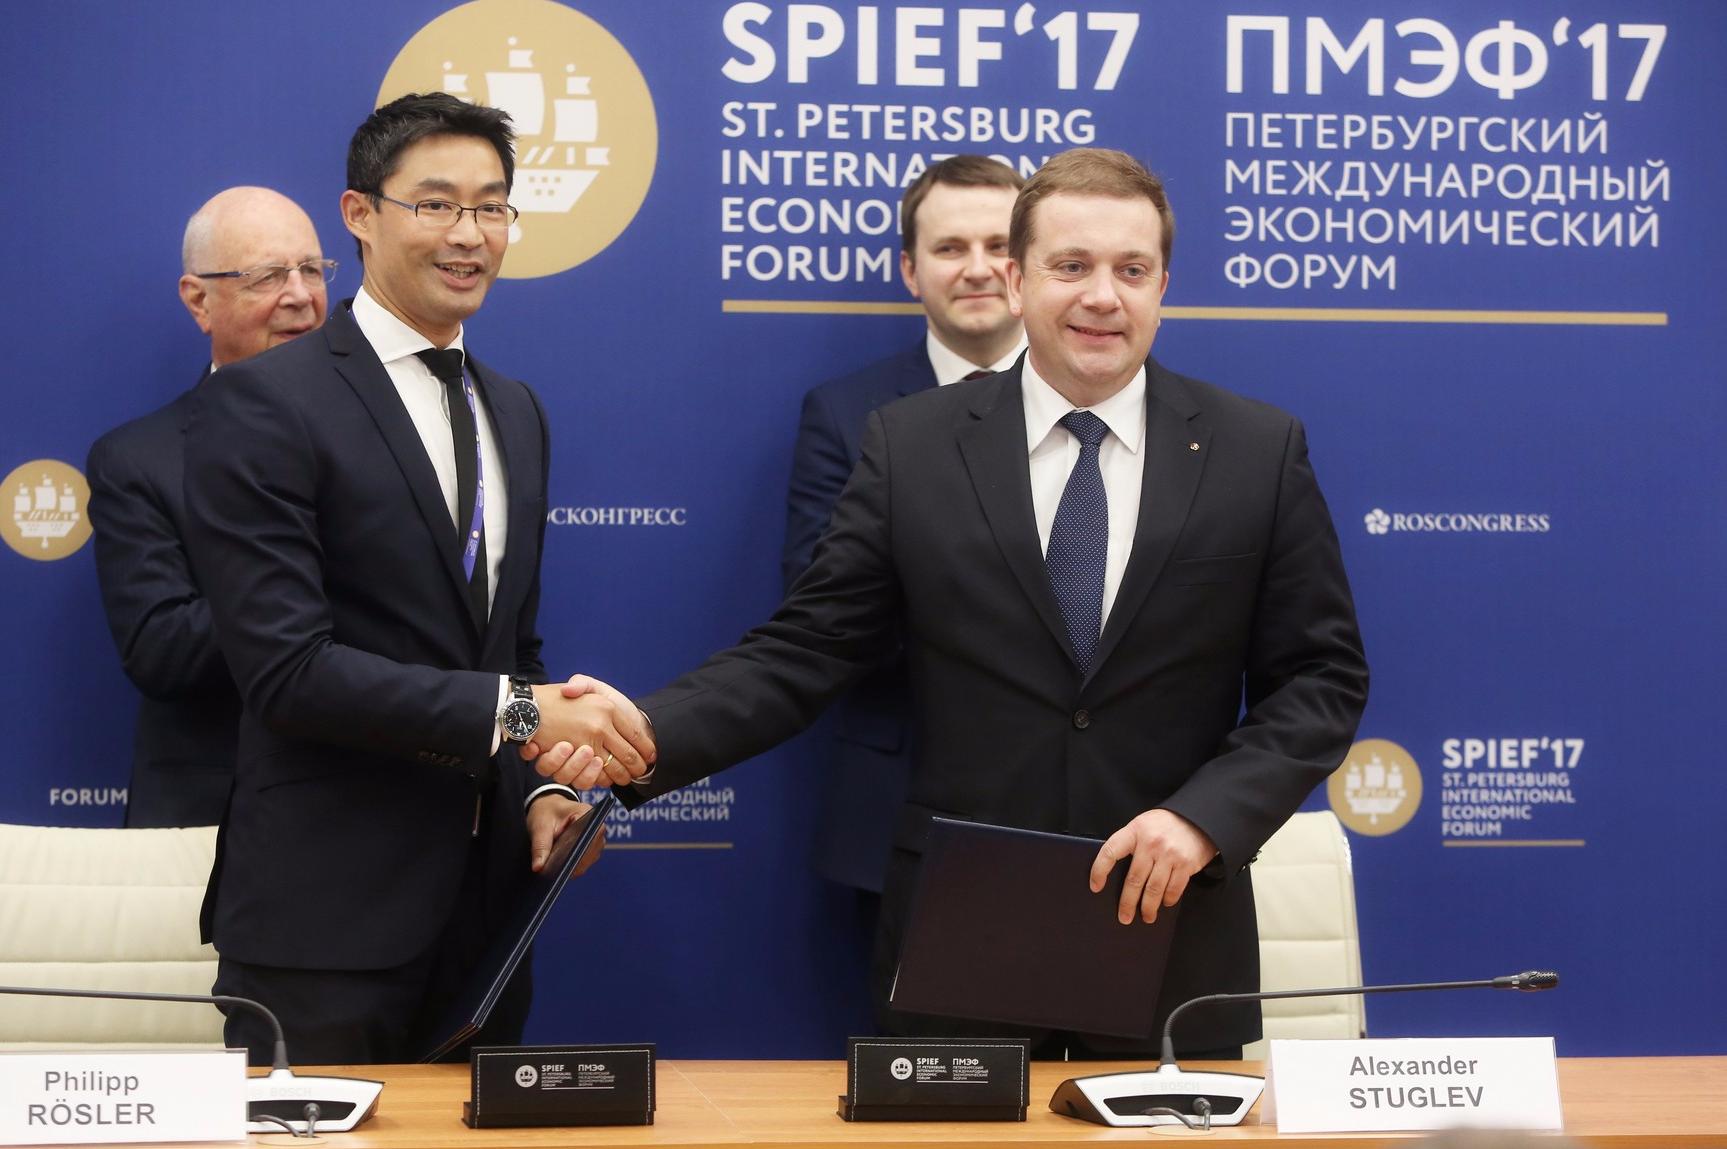 Roscongress Foundation and World Economic Forum sign memorandum on cooperation